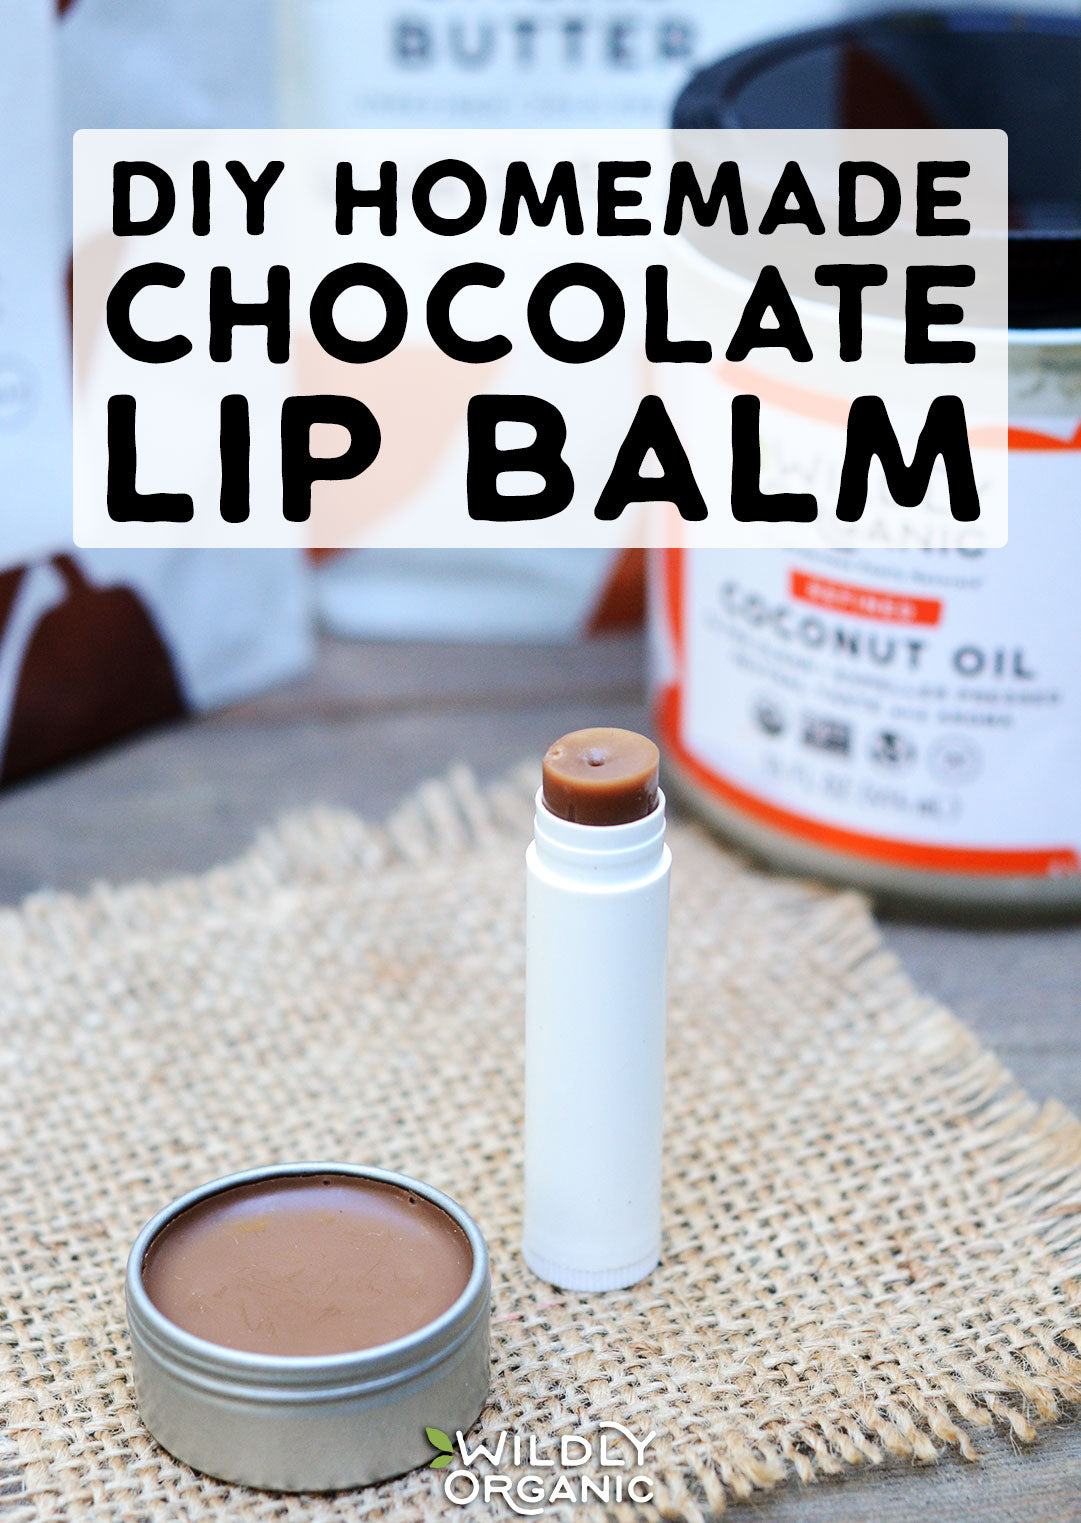 Chocolate lip balm